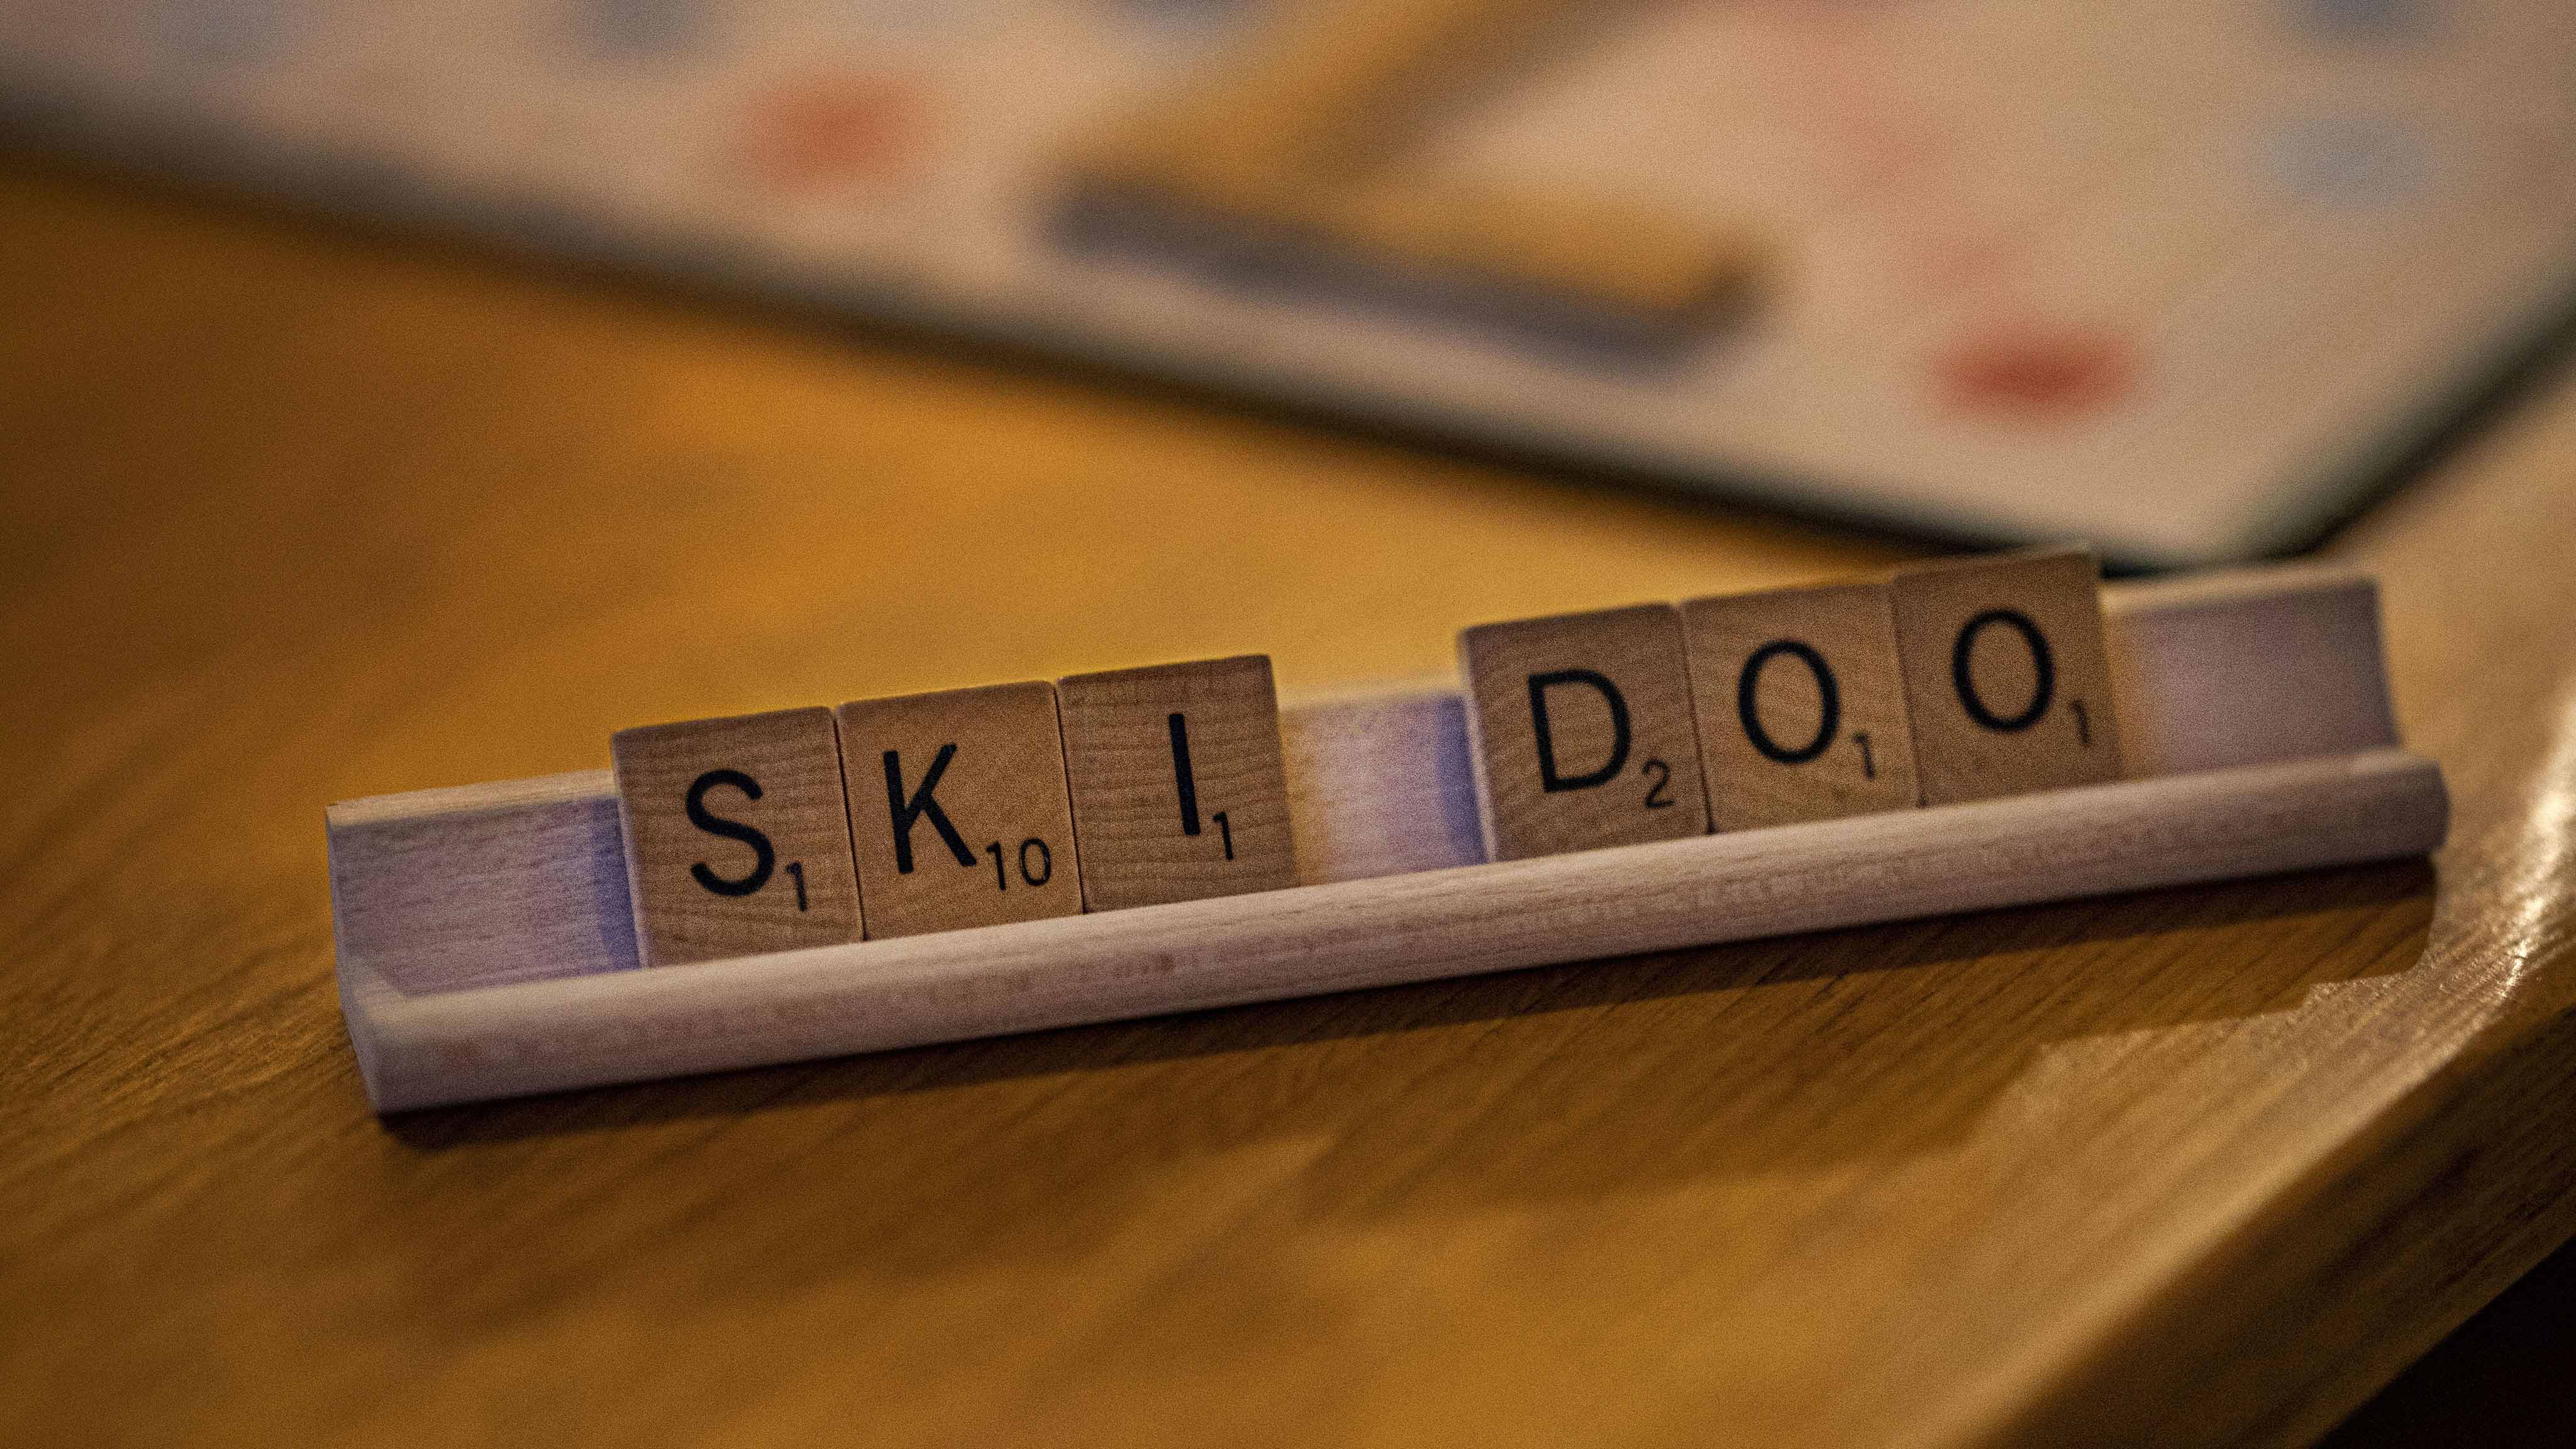 Ski-Doo written with Scrabble letters